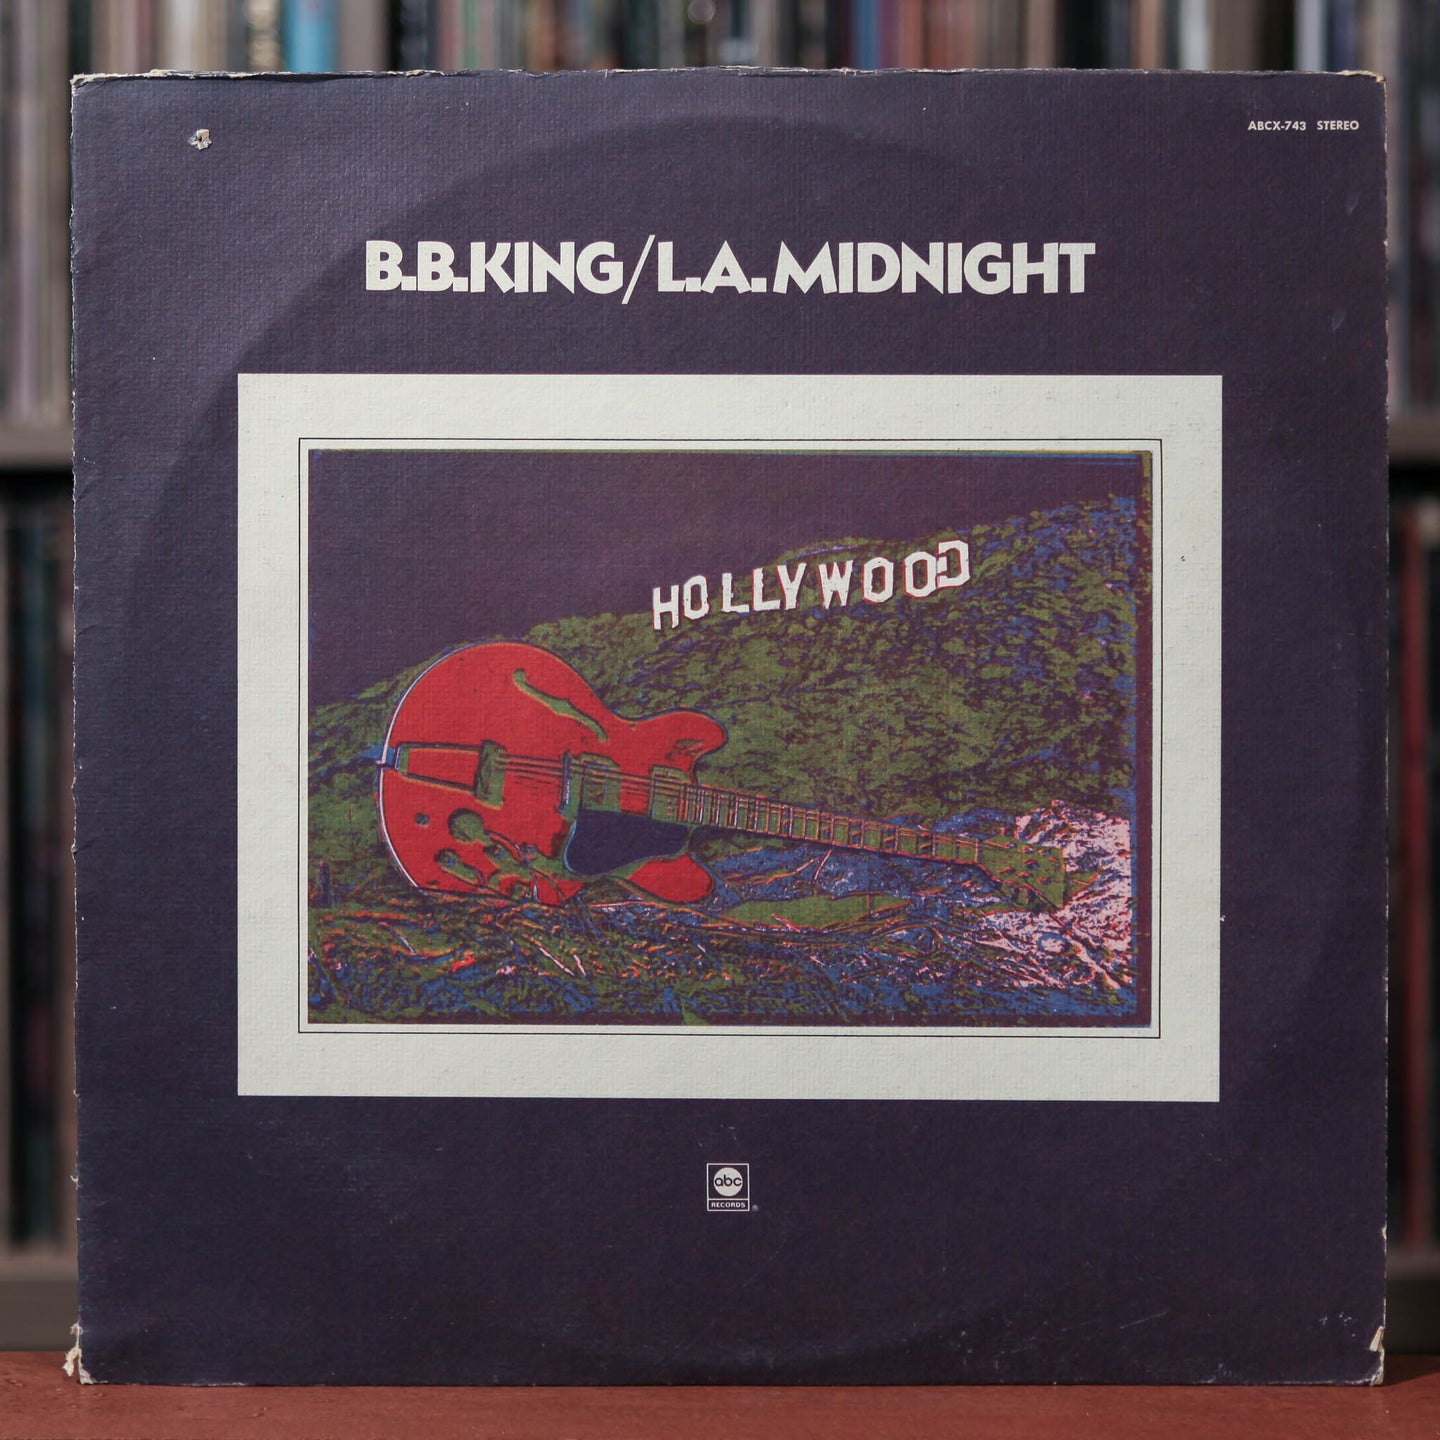 B.B. King - L.A. Midnight - 1972 ABC, VG/VG